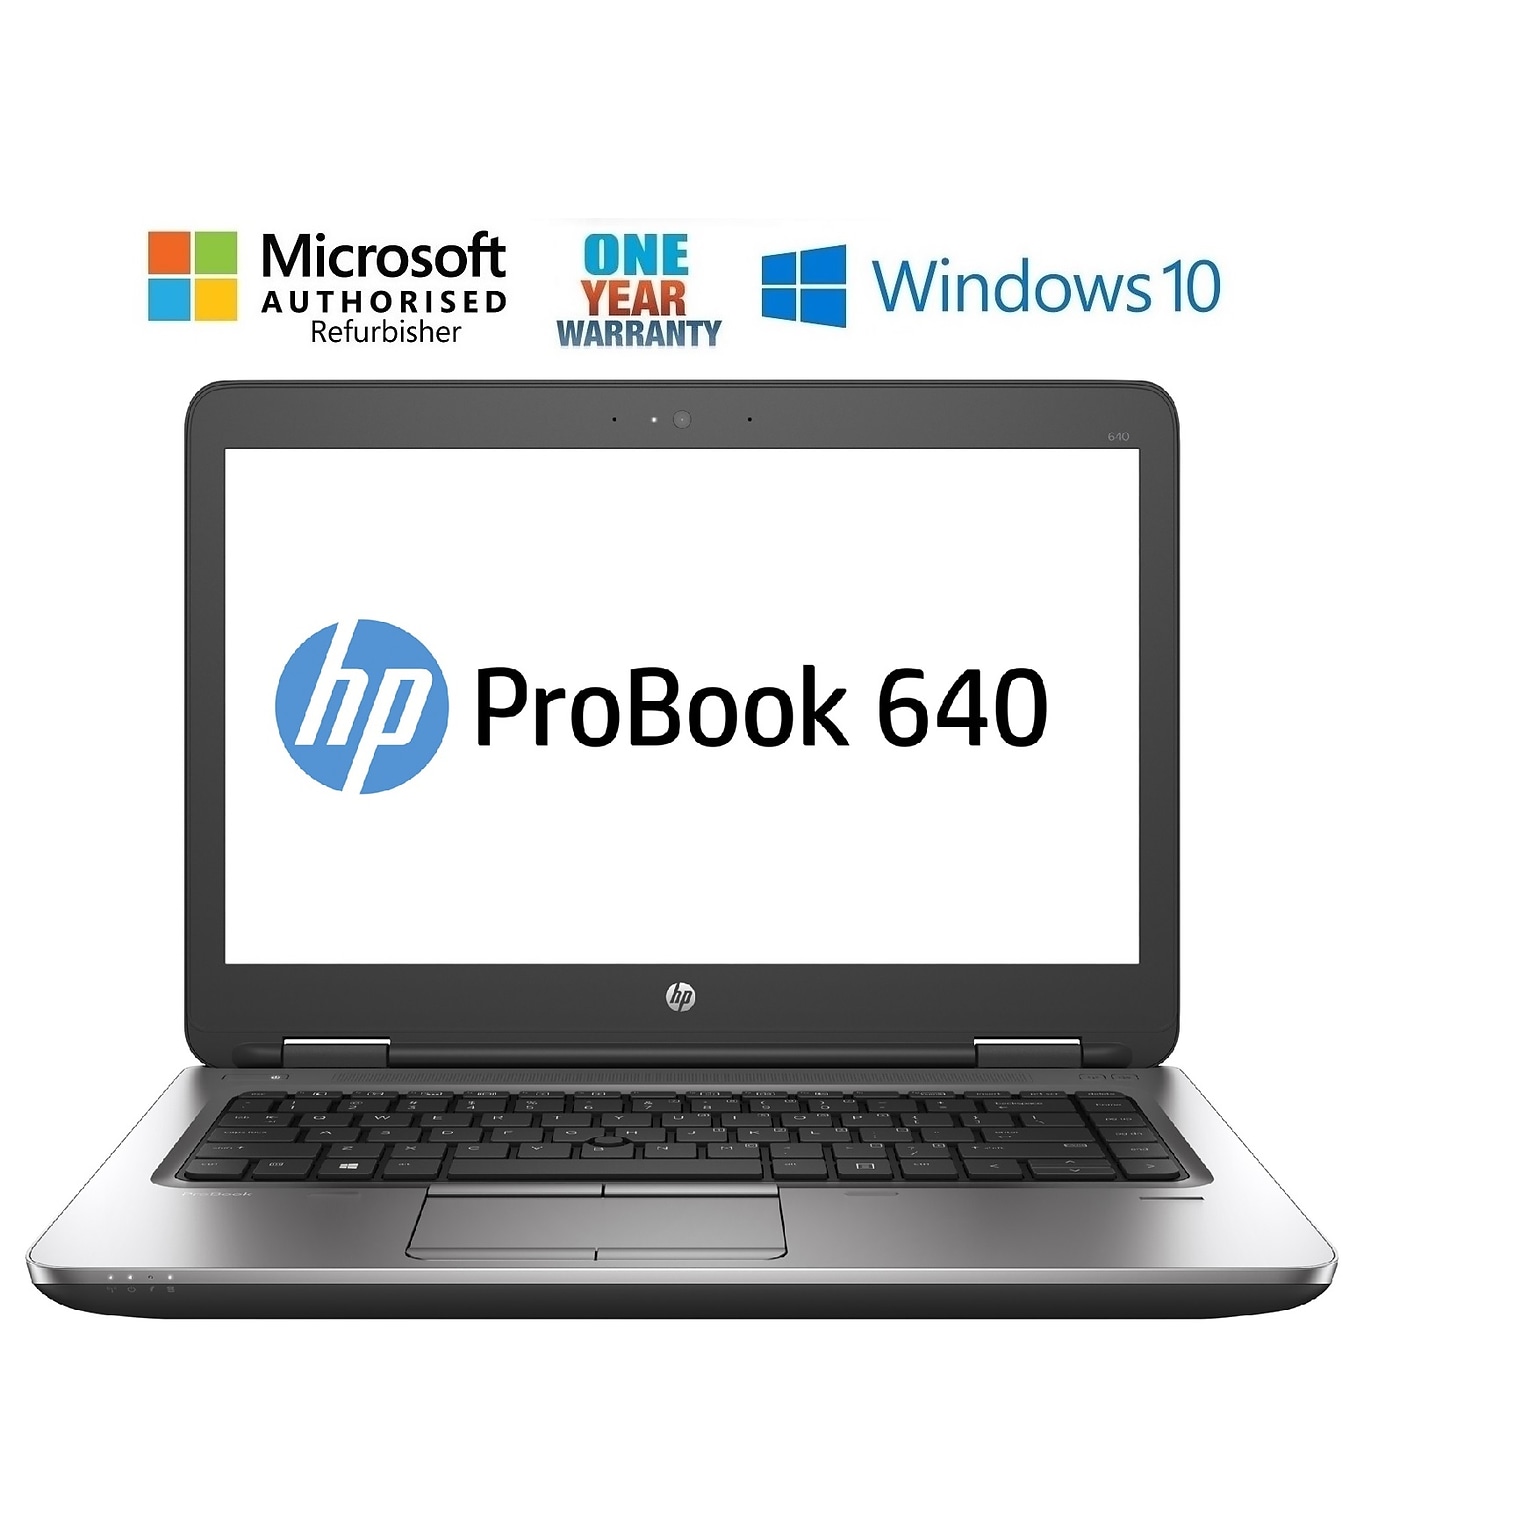 HP ProBook 640 G2, 14 Refurbished Laptop, Intel i5 6300U 2.4 GHz Processor, 8GB Memory, 128GB SSD, Windows 10